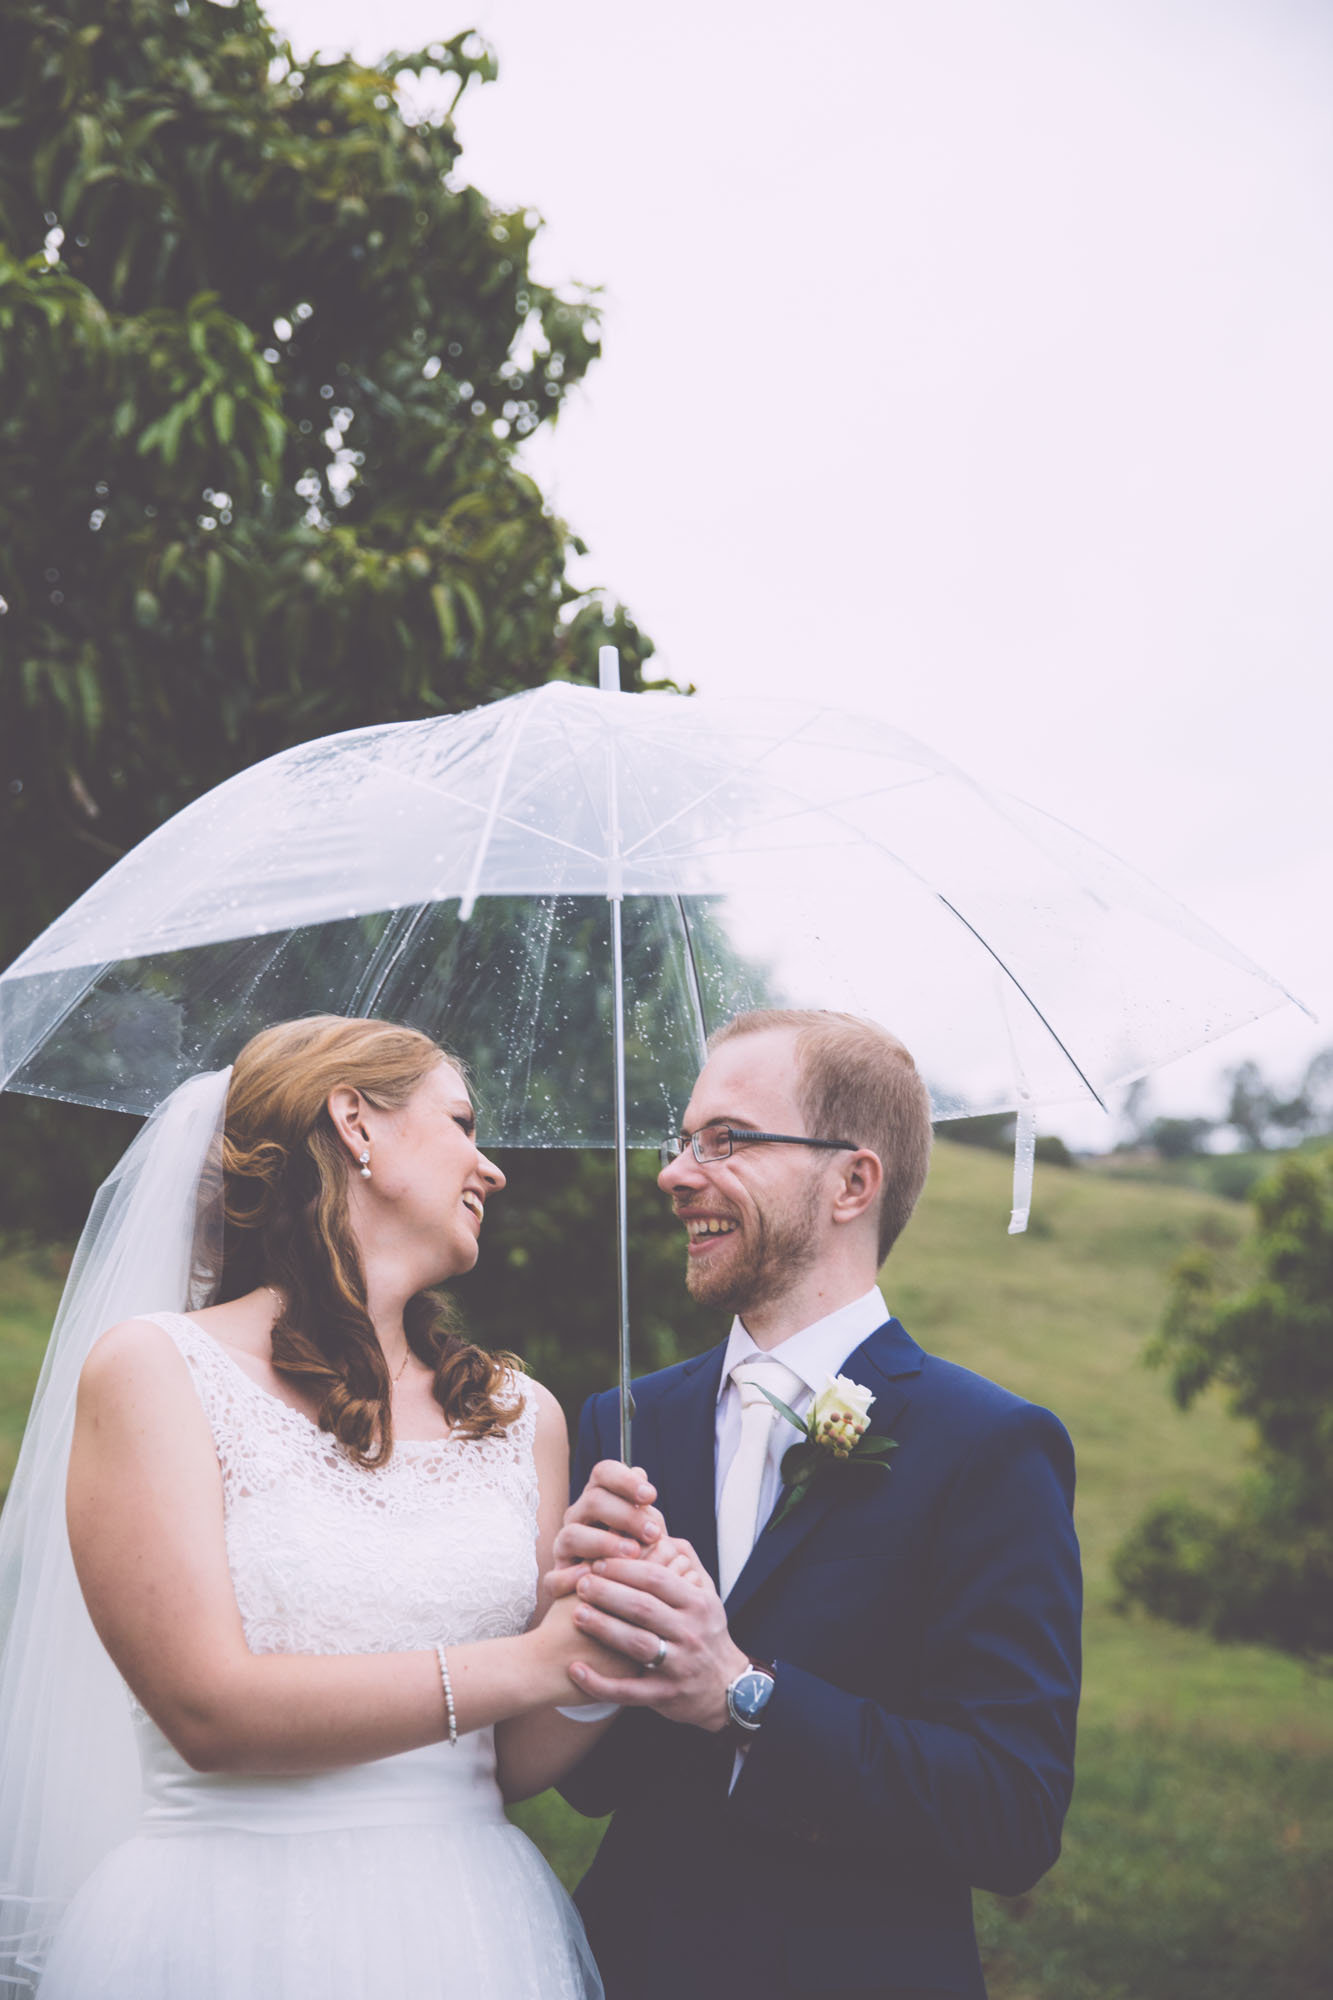 Rainy Wedding Day Photographs Anna Osetroff Laidley